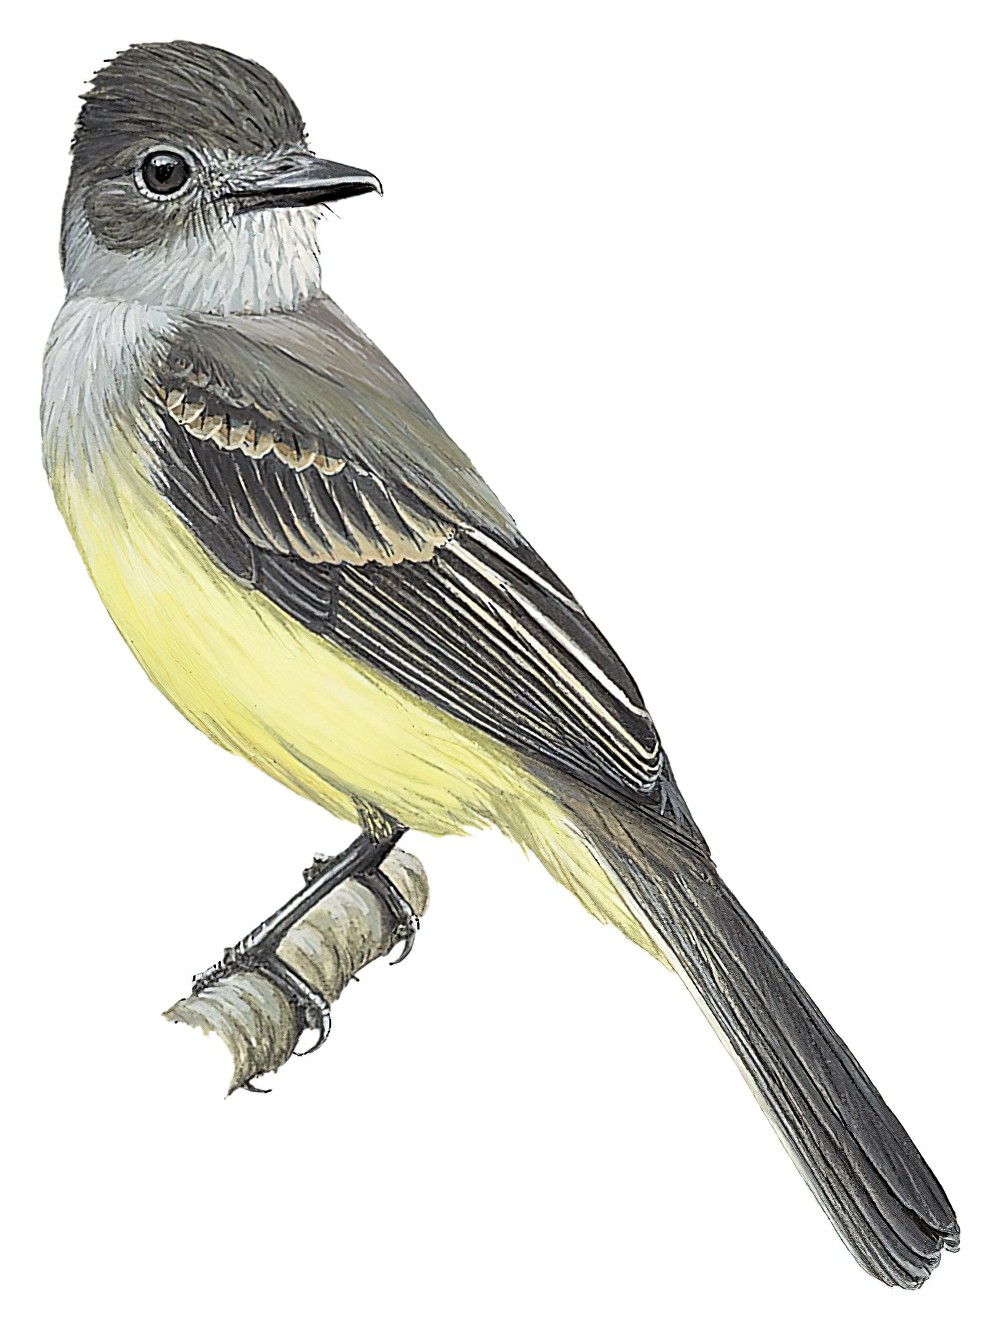 Sooty-crowned Flycatcher / Myiarchus phaeocephalus